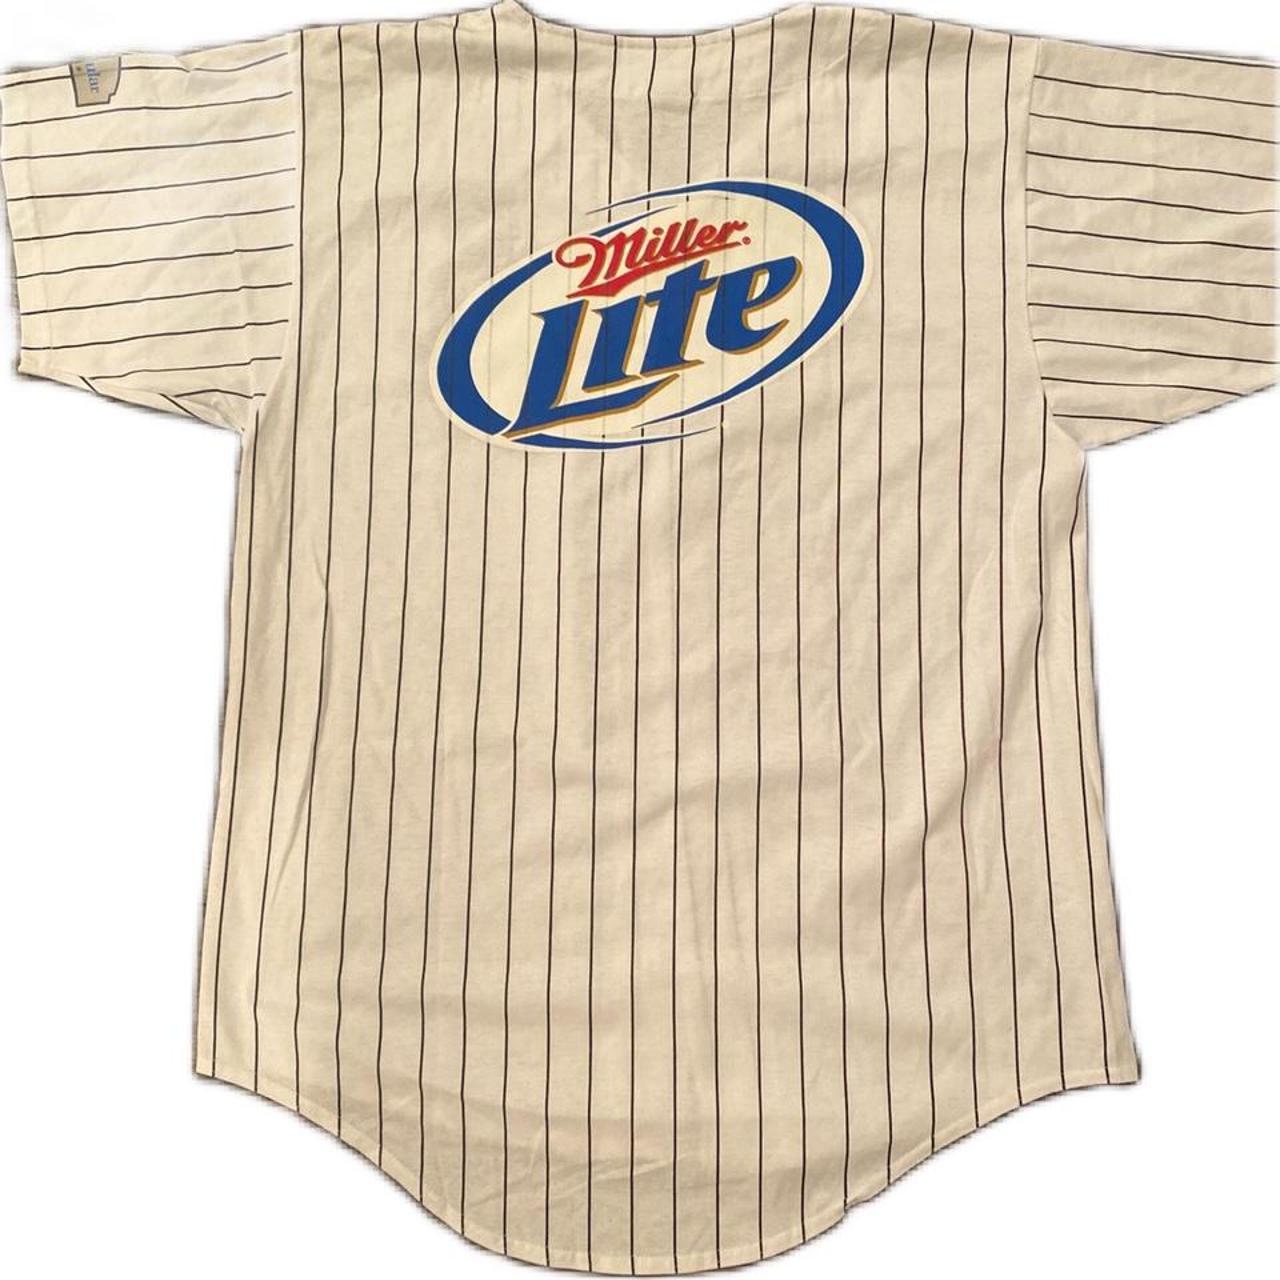 1990s cotton Miller lite promotional Sox jersey - Depop